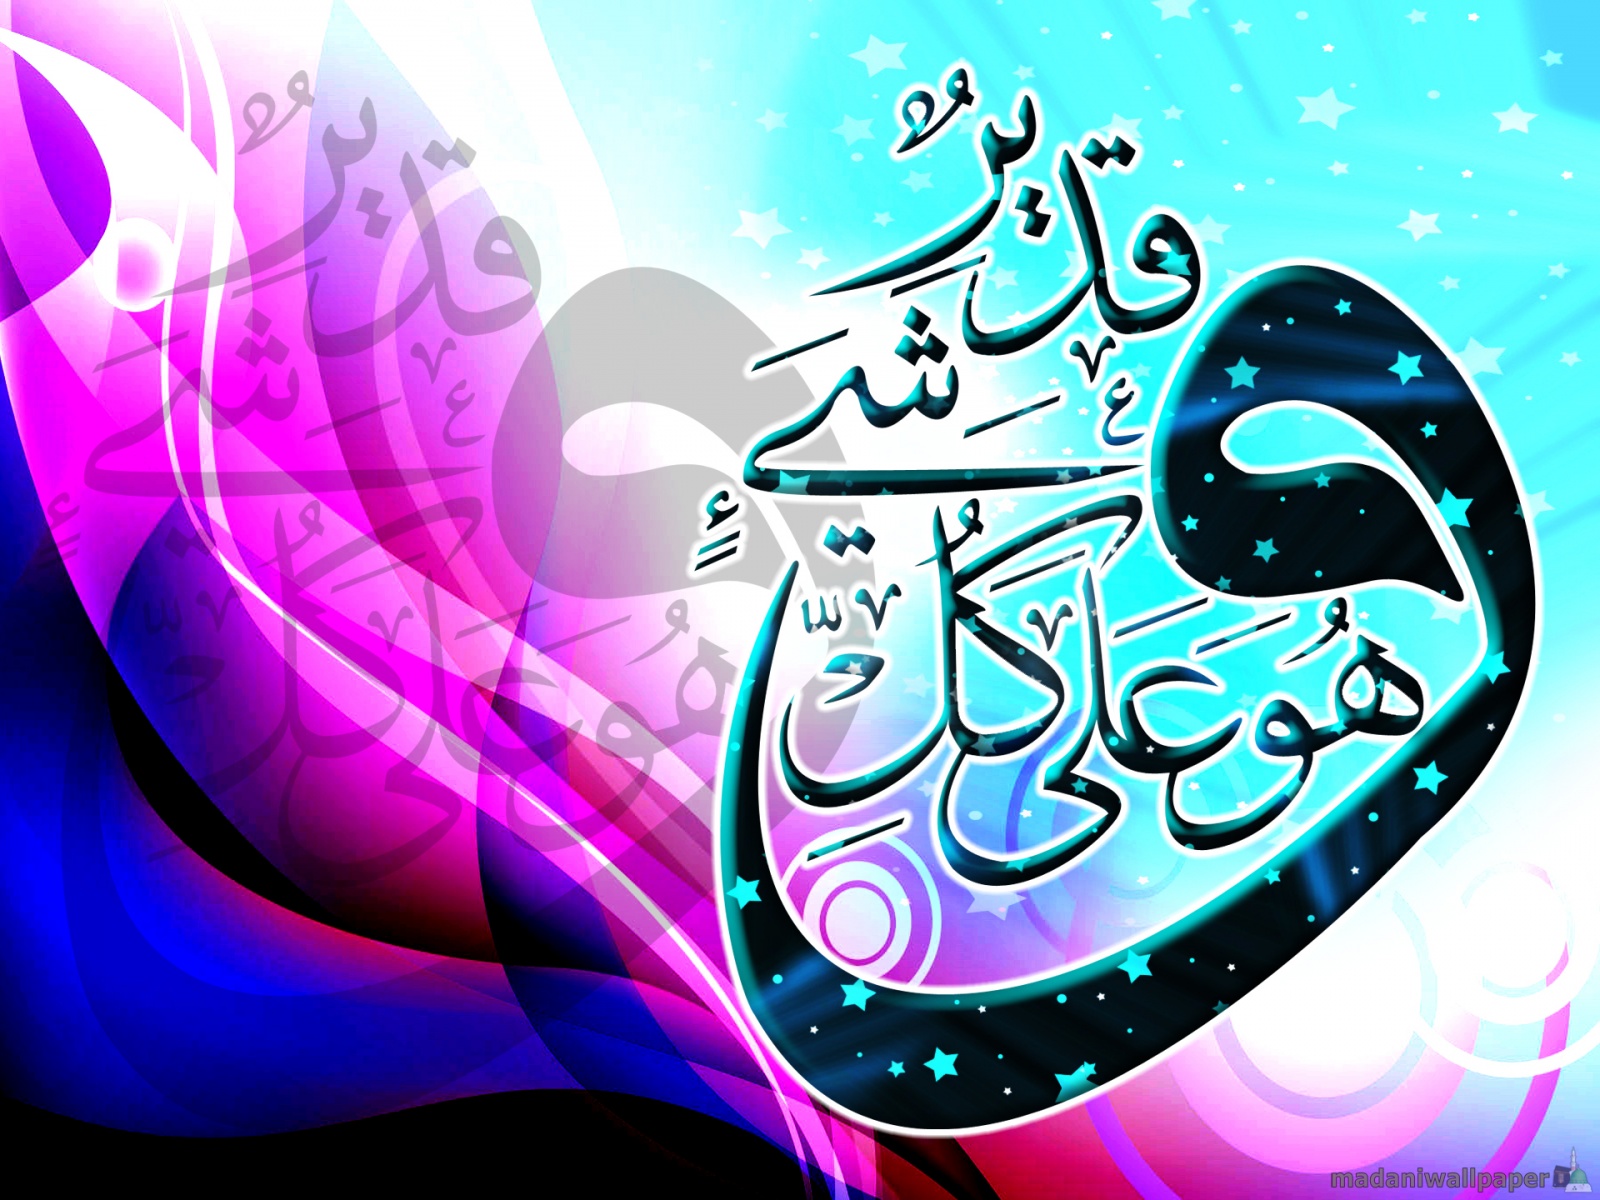  to set Islamic Calligraphy Wallpaper 2013 wallpaper on your desktop